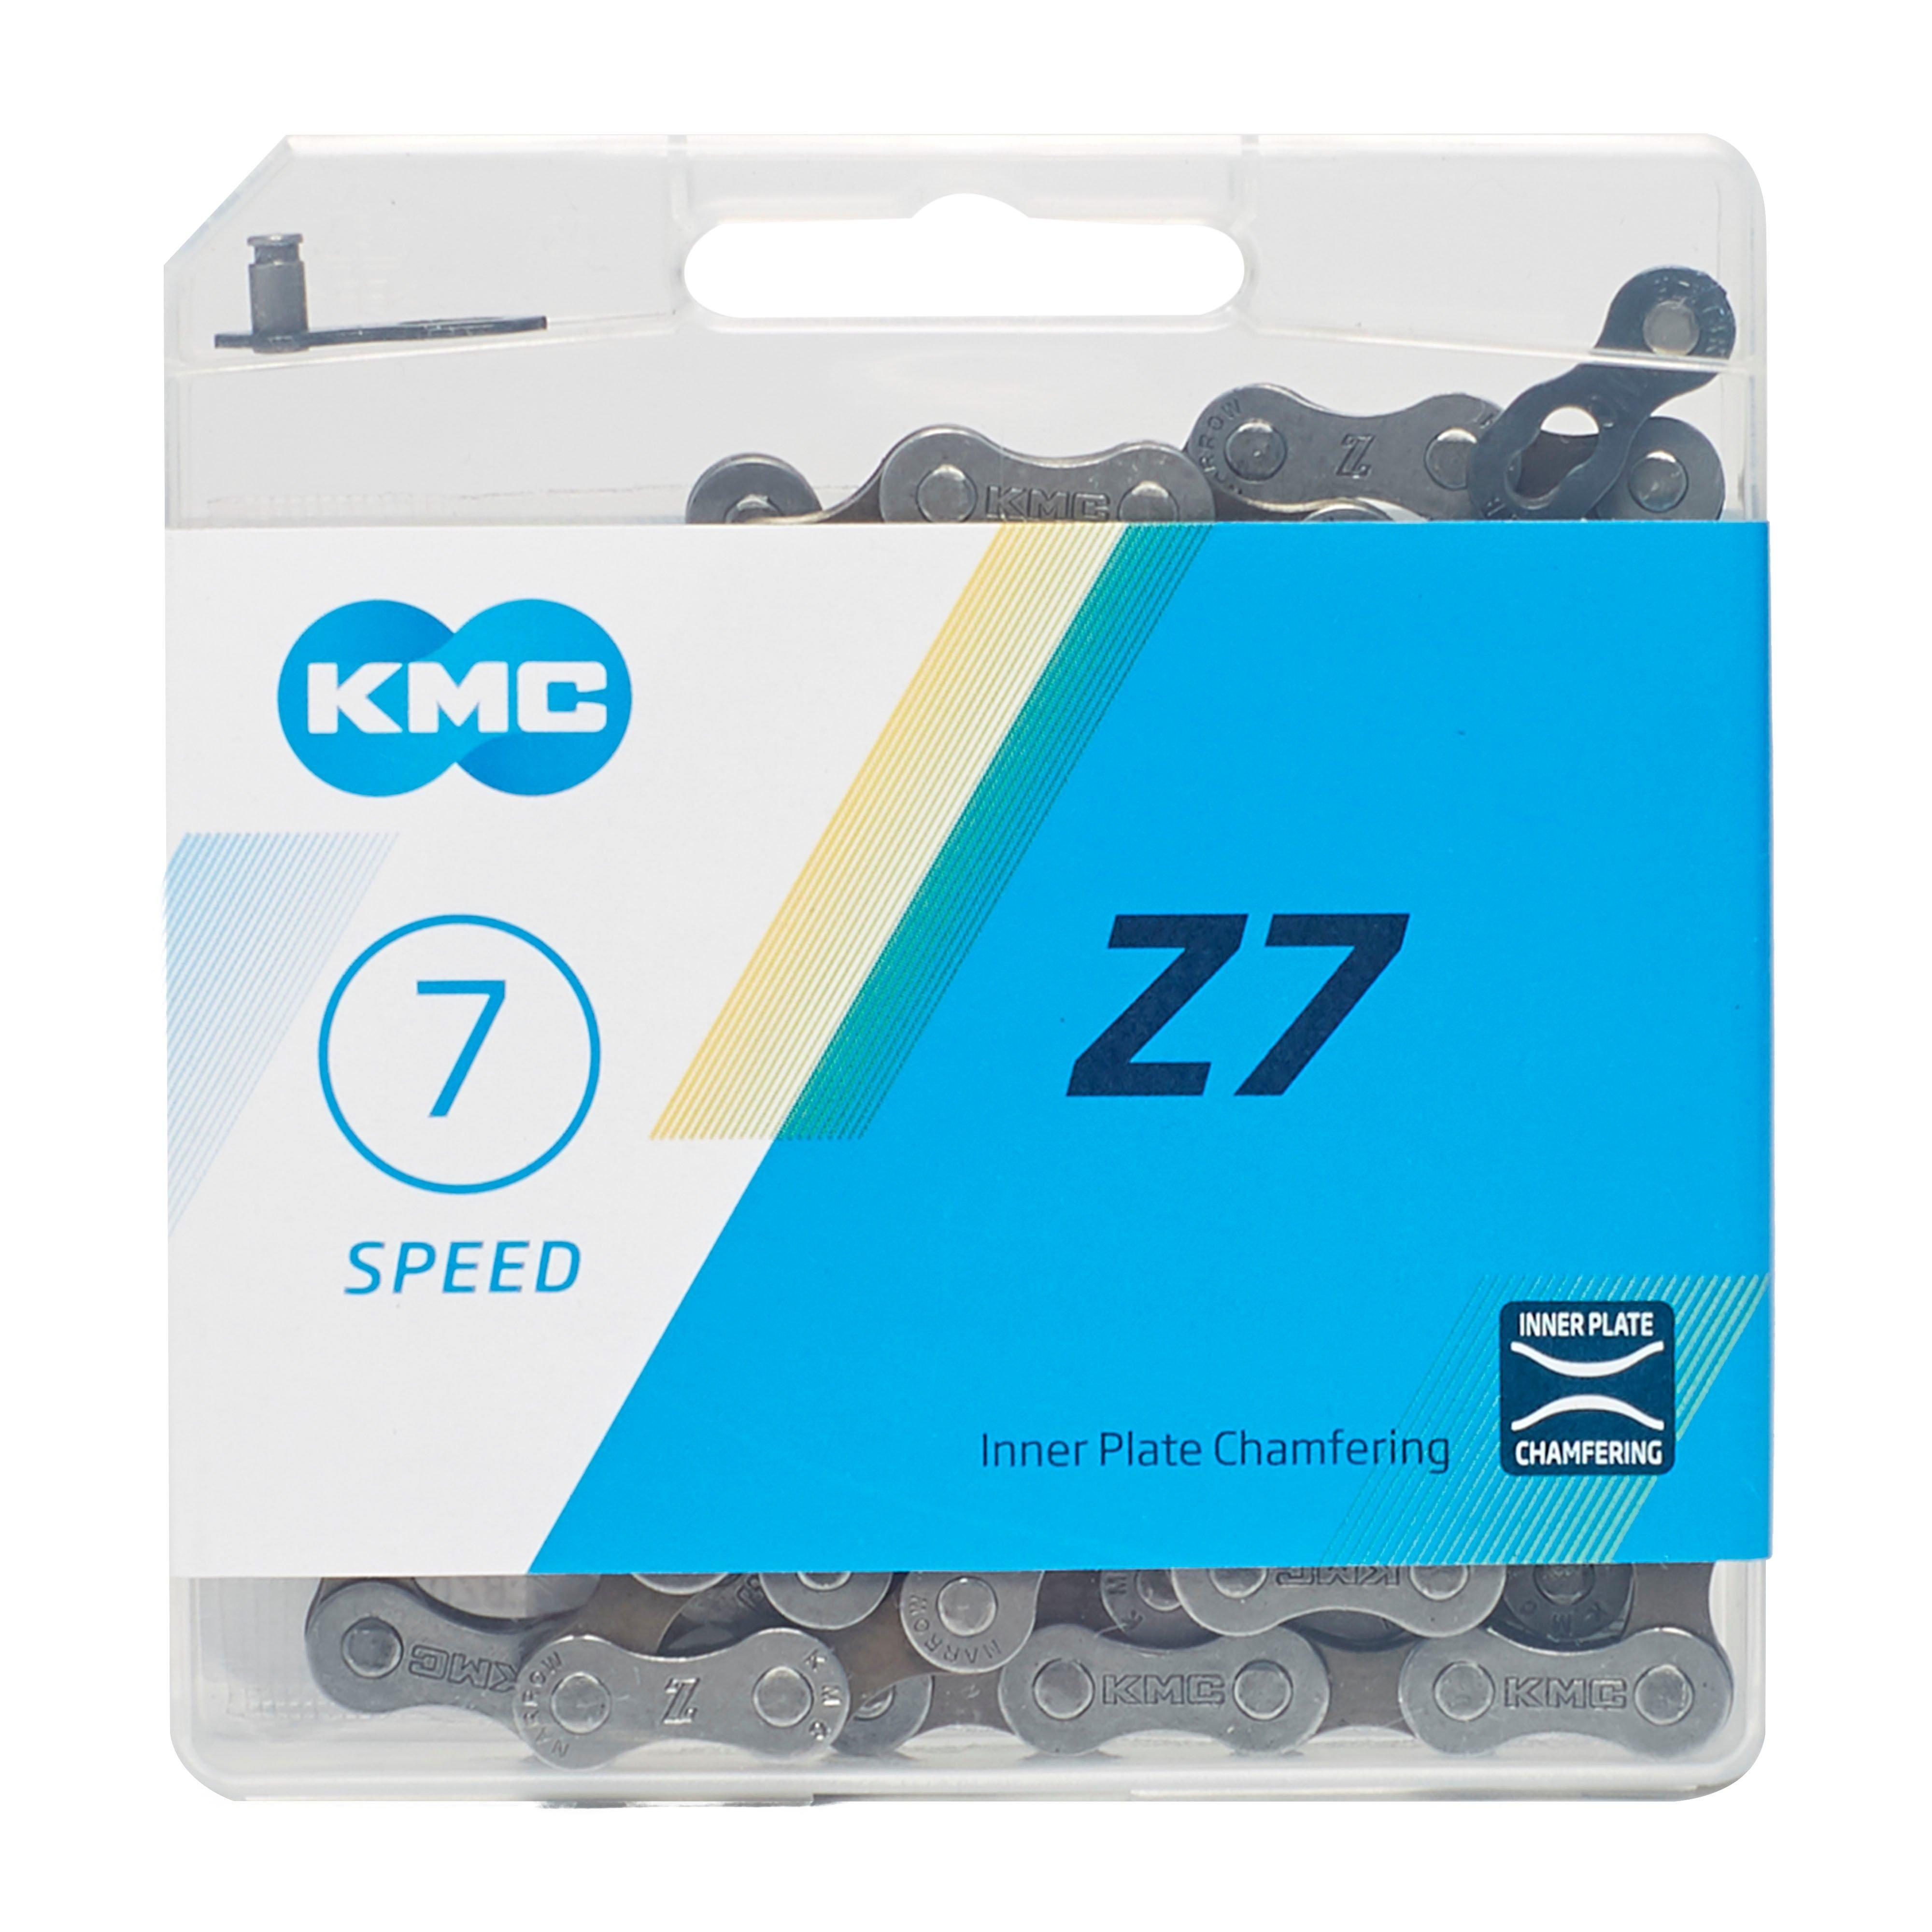 KMC Chains Z7 Bike Chain Review